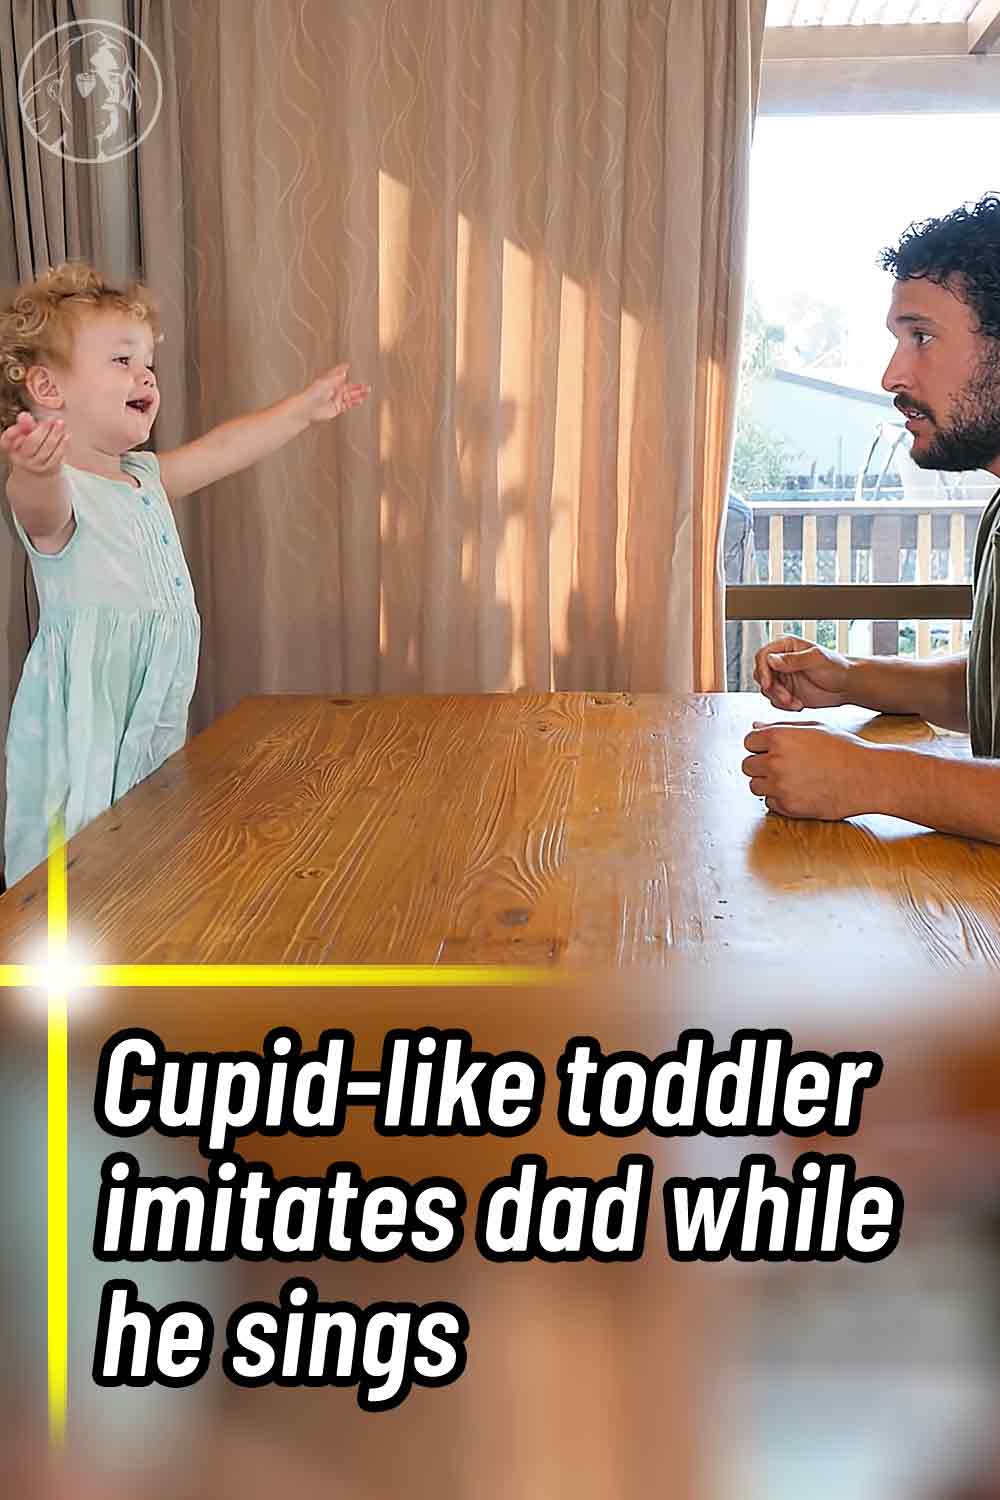 Cupid-like toddler imitates dad while he sings